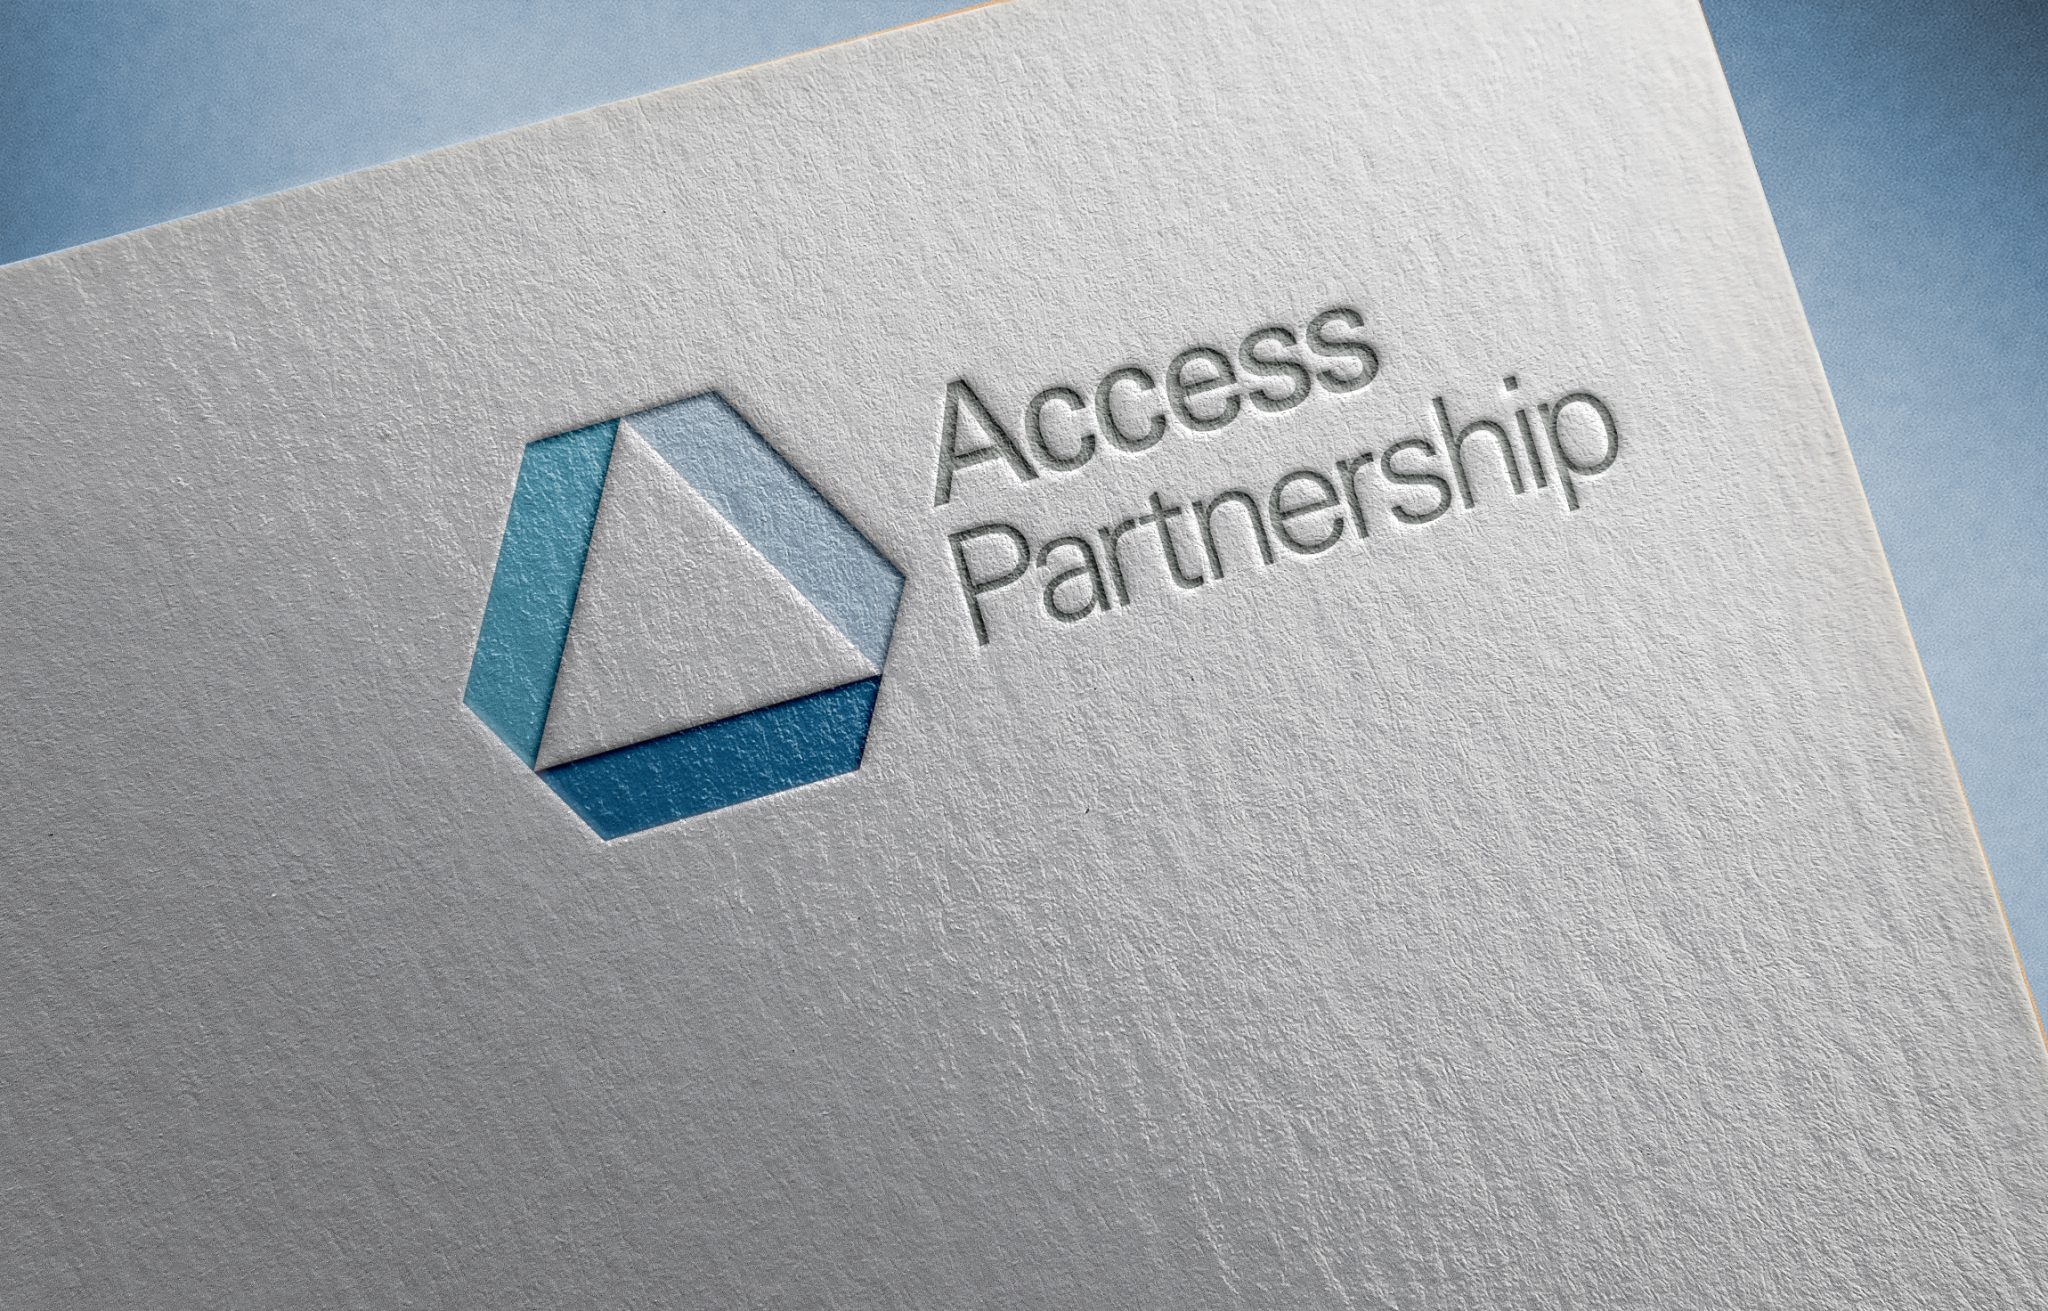 Access Partnership Welcomes Rick Goss as a Senior Advisor for Sustainability